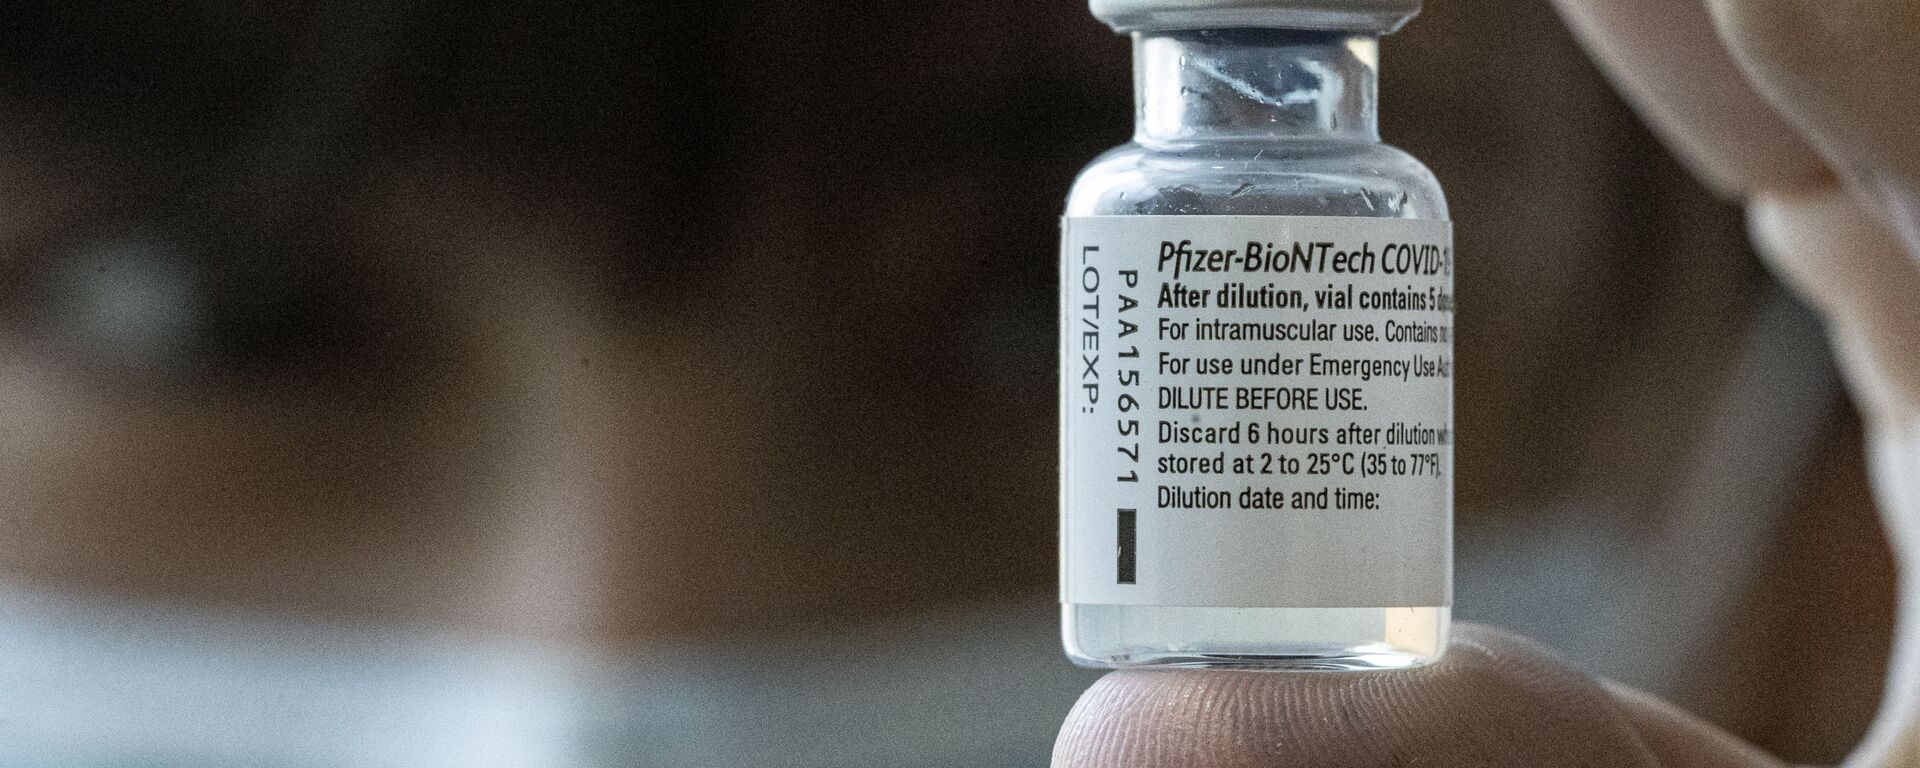 La vacuna Pfizer-BioNTech contra el COVID-19 - Sputnik Mundo, 1920, 08.07.2021